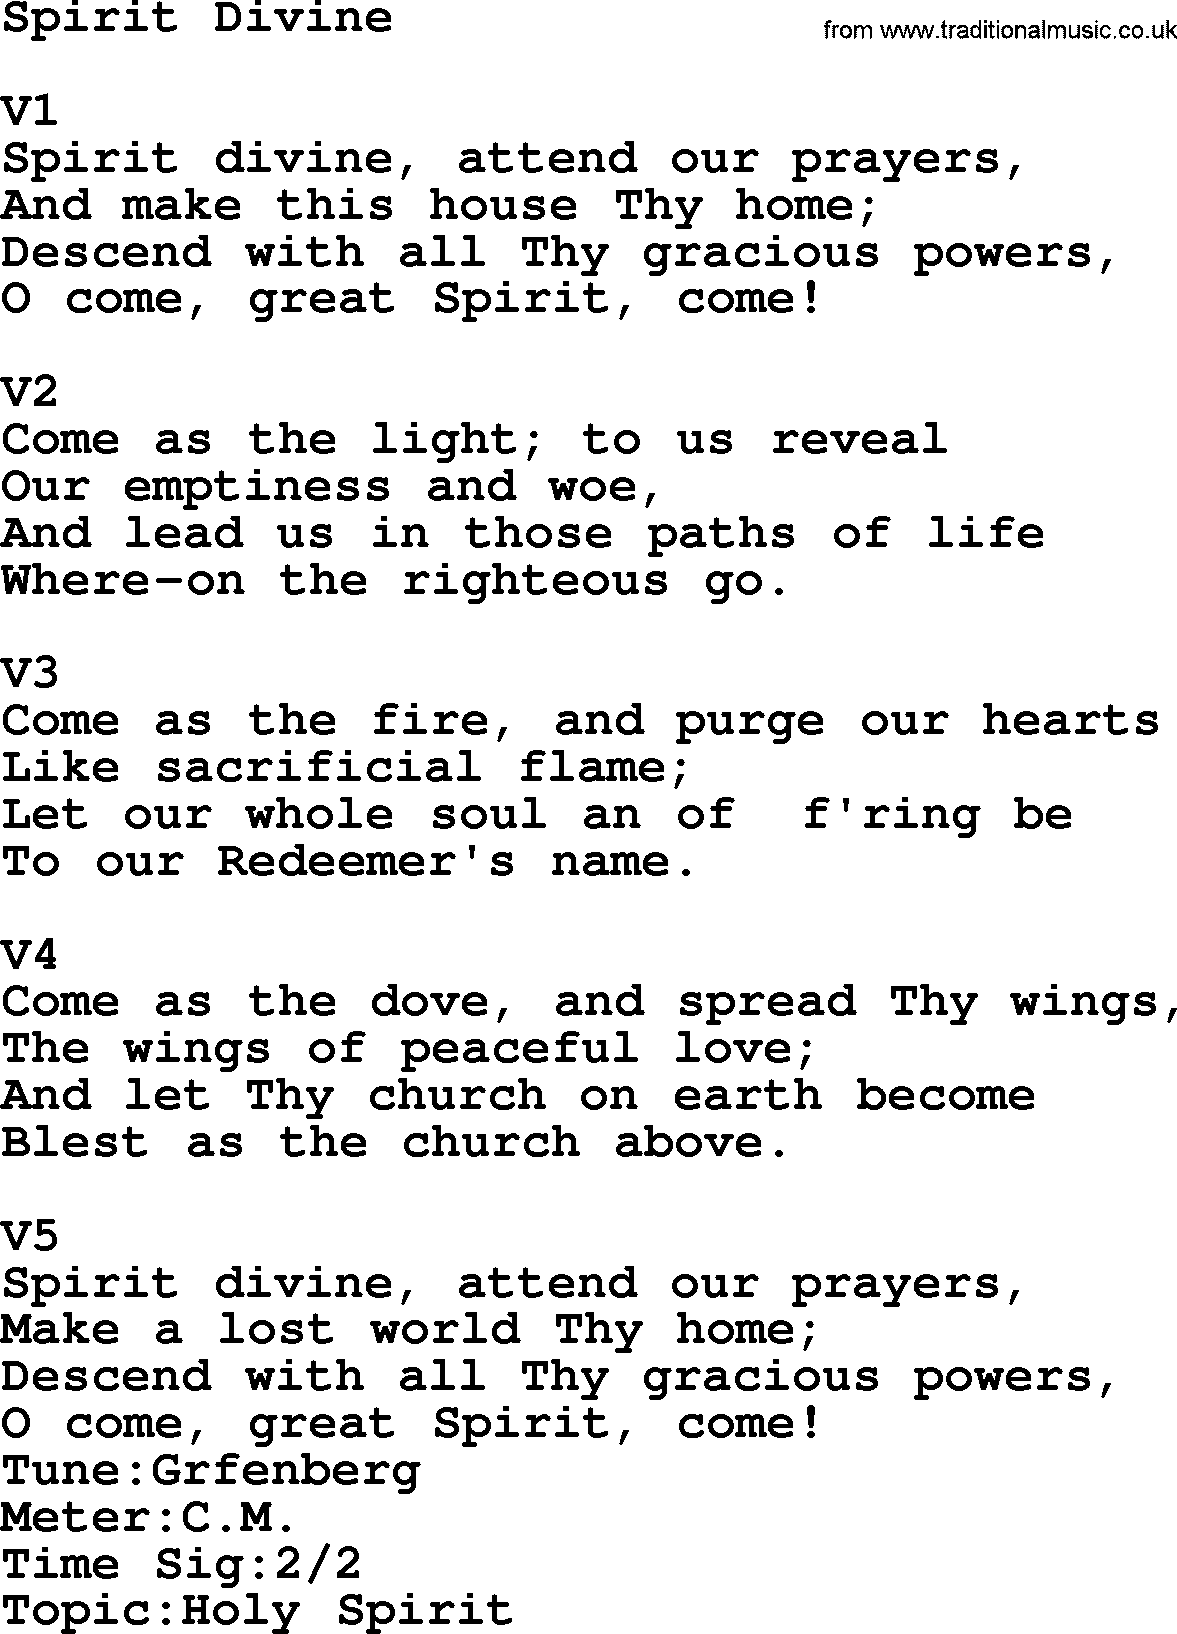 Adventist Hynms collection, Hymn: Spirit Divine, lyrics with PDF